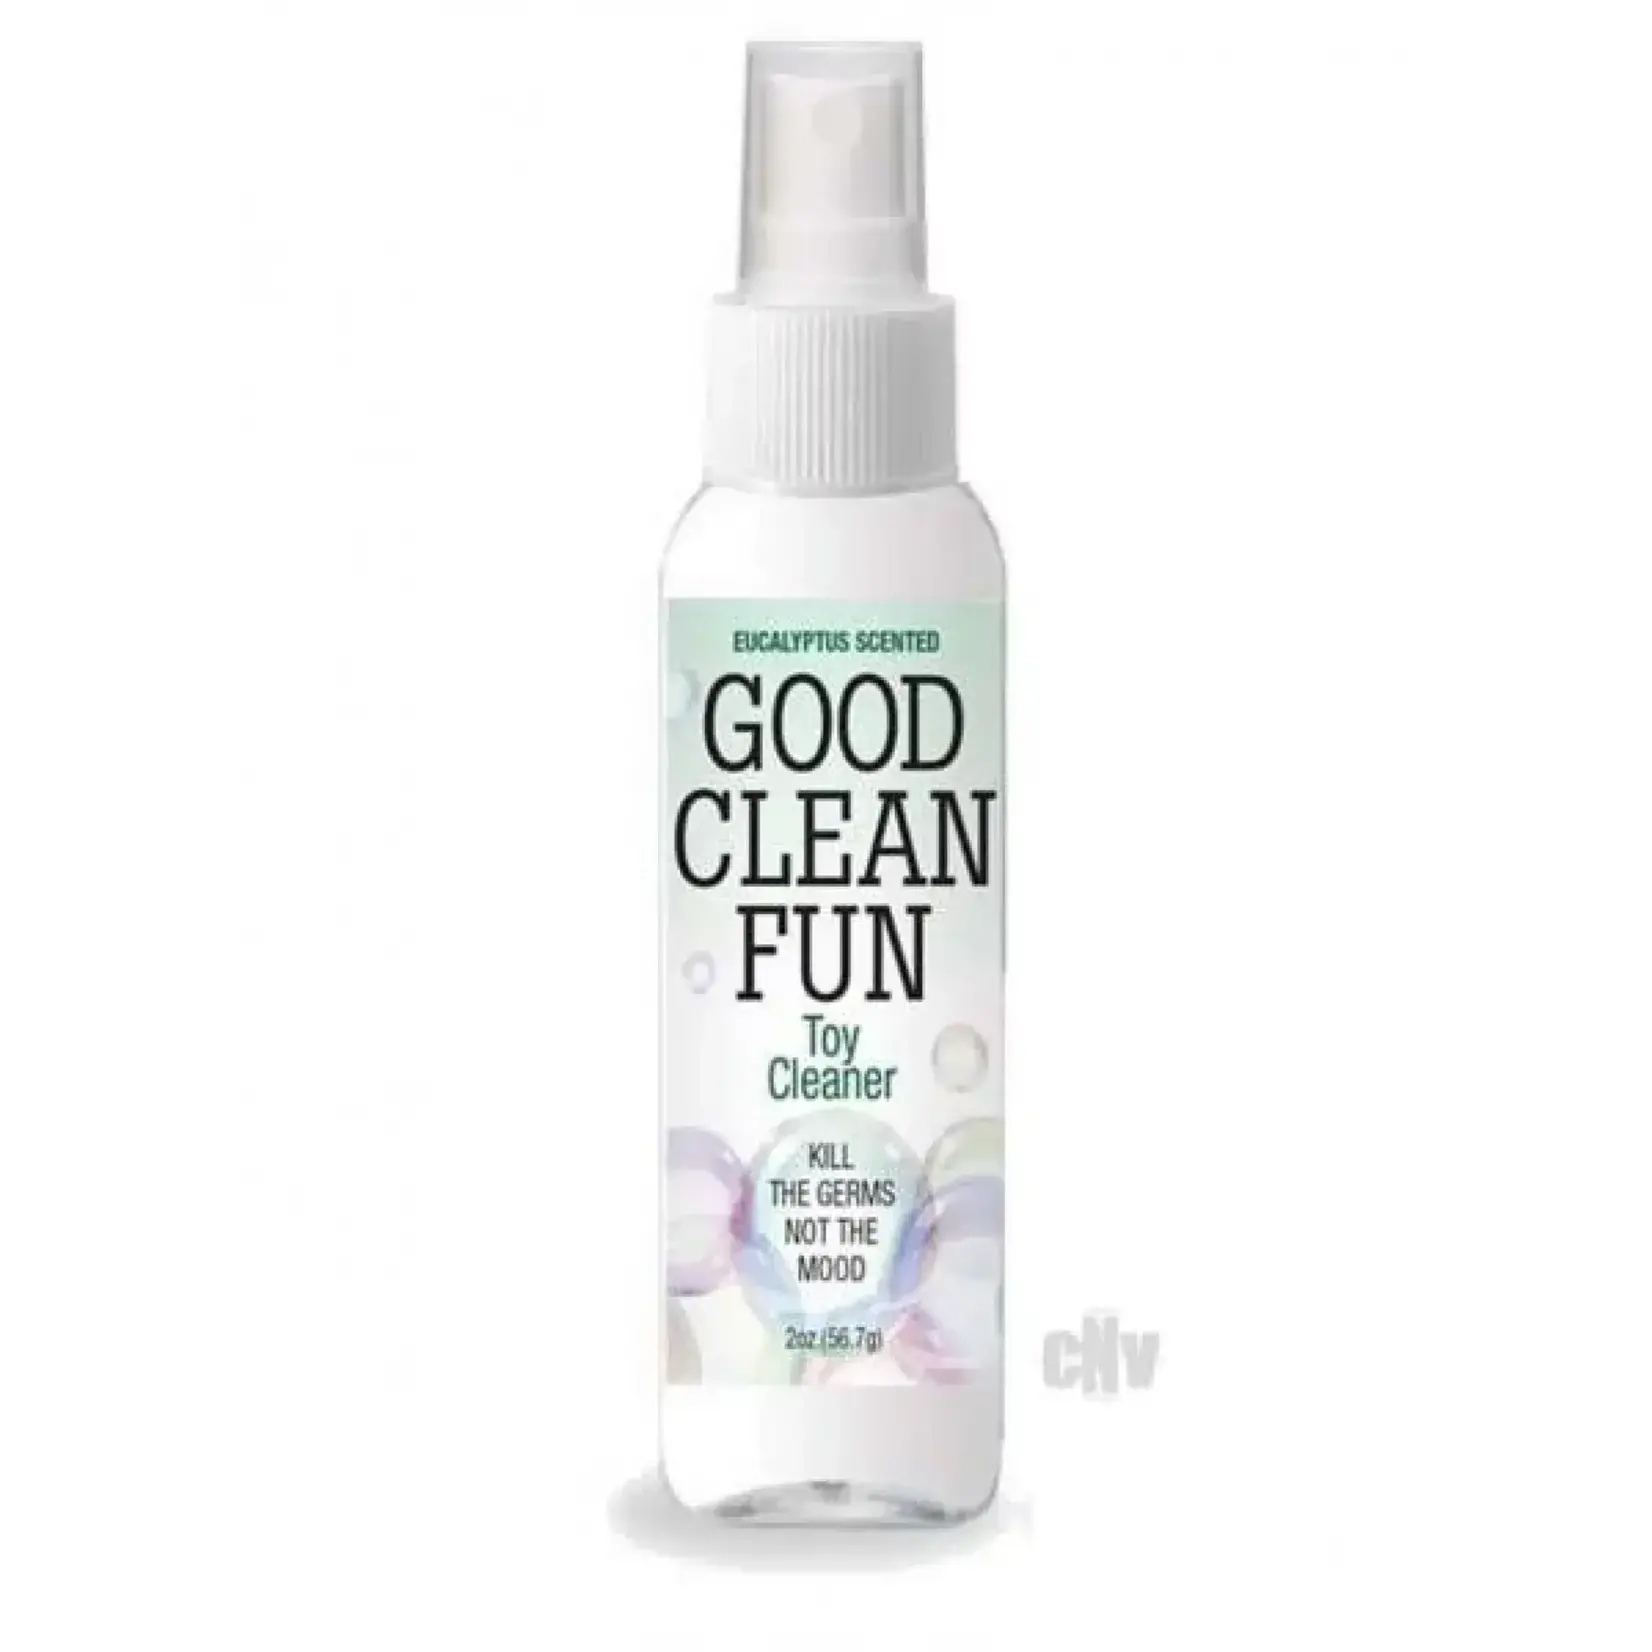 good clean fun Good Clean Fun - Toy Cleaner, 2oz - Eucalyptus Scented